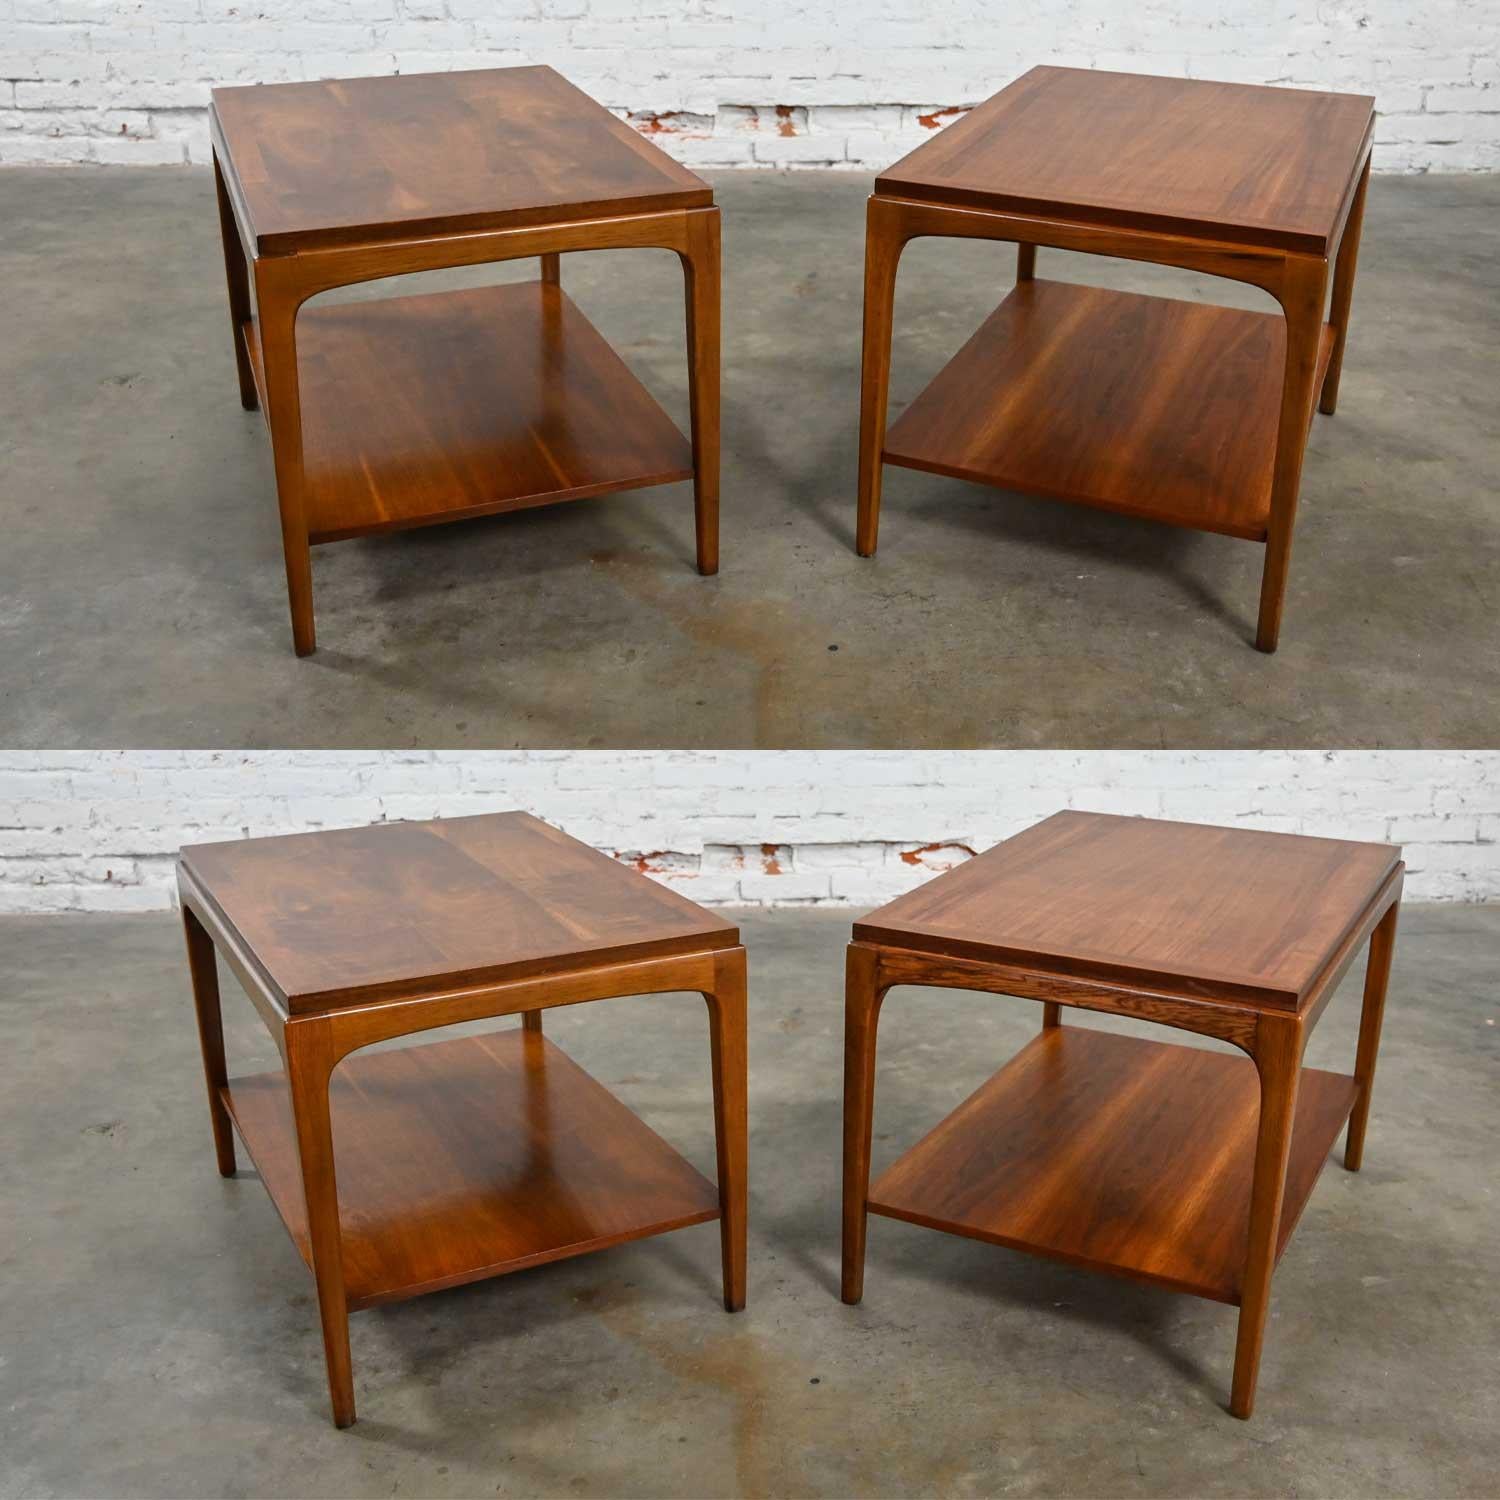 Mid-20th Century Lane Rhythm Pair of Mid-Century Modern Walnut End Tables with Lower Shelf